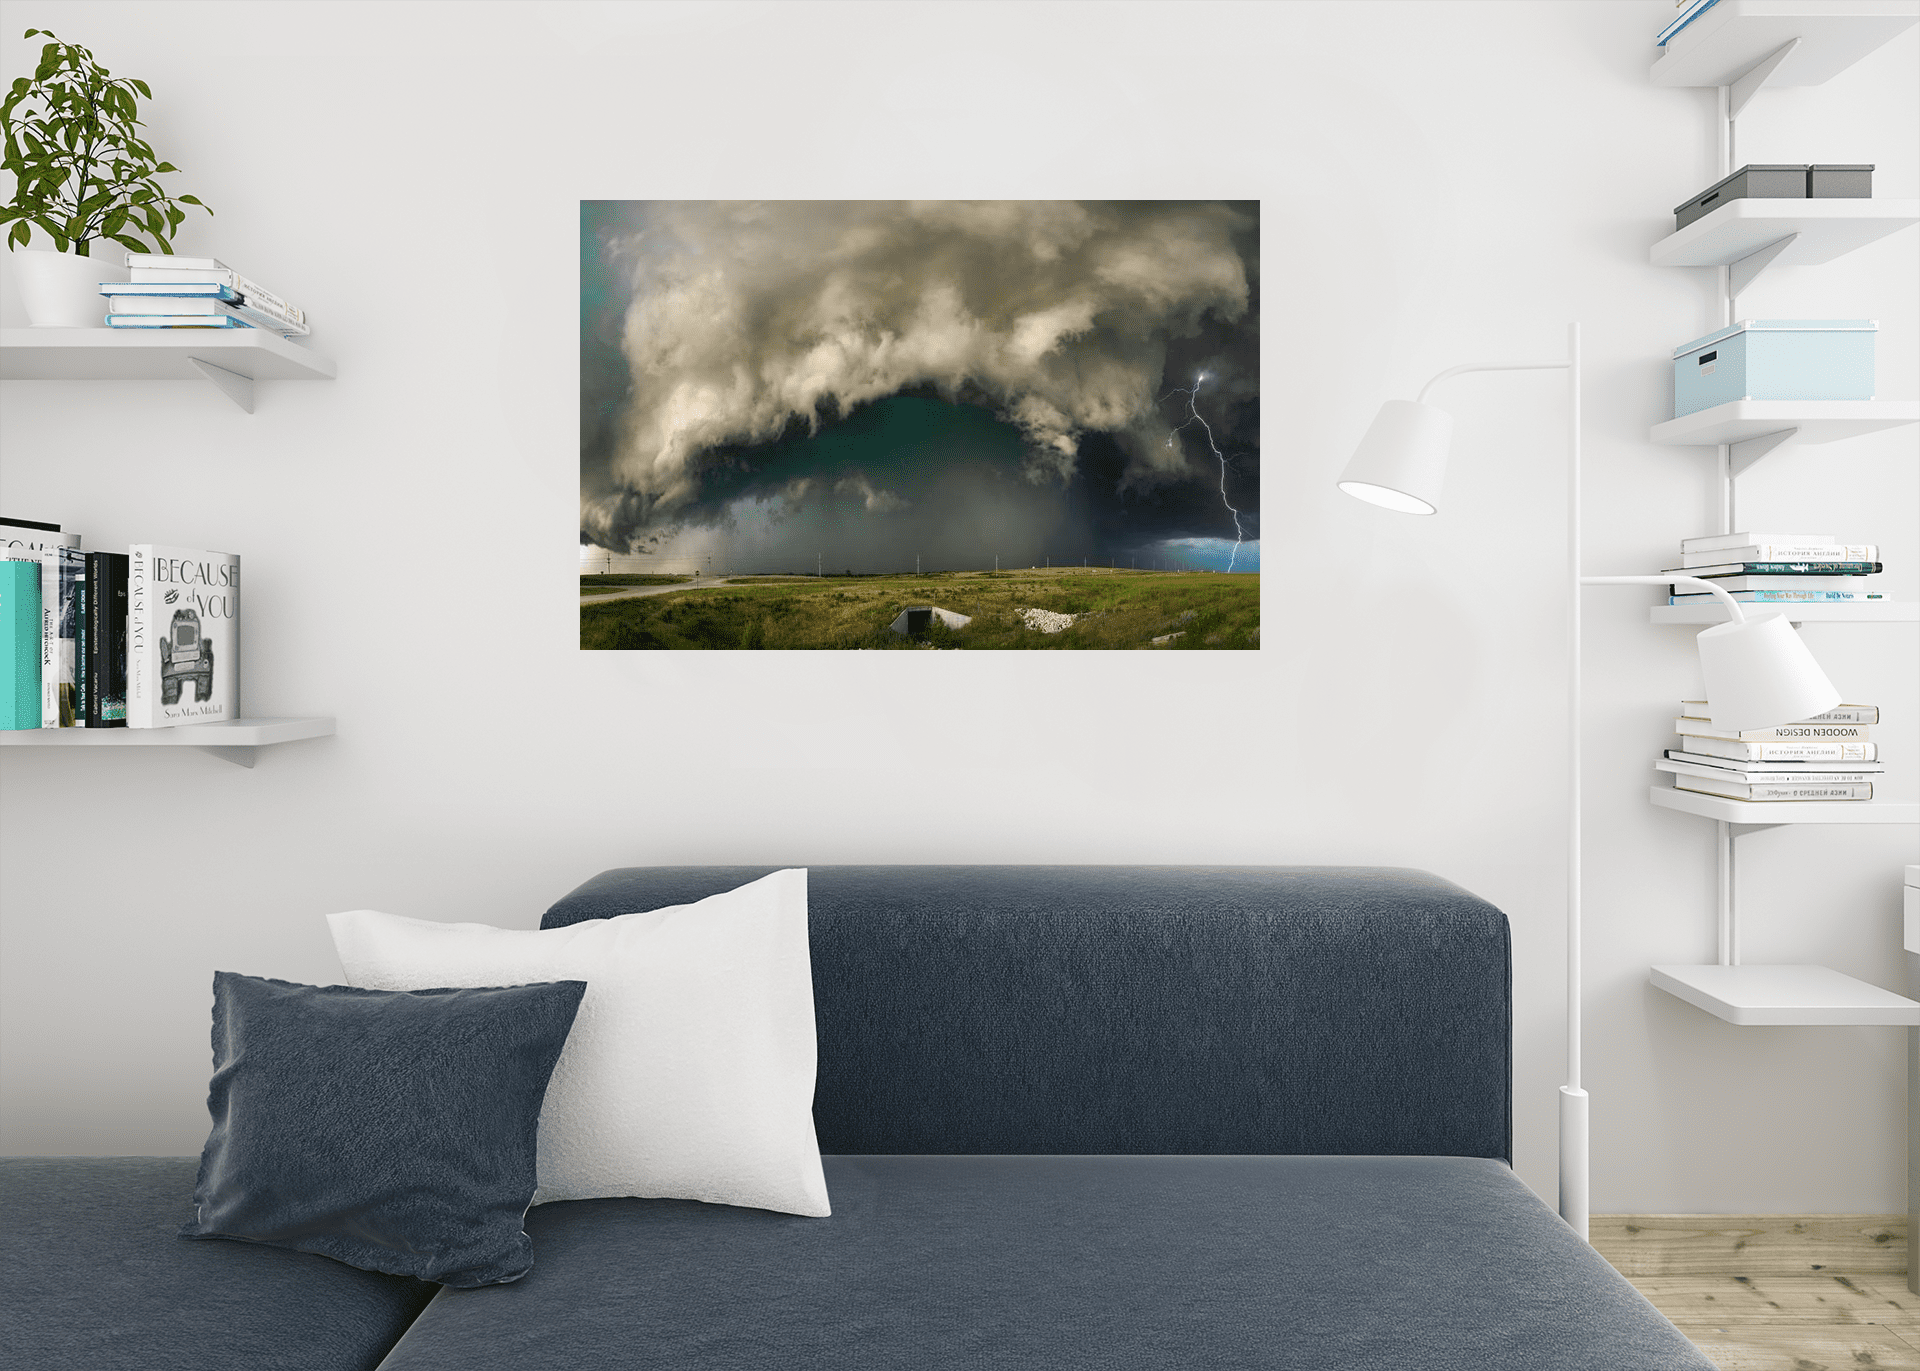 Violent Thunderstorm on Plains of Kansas Photo Art Print Poster 18x12 inch